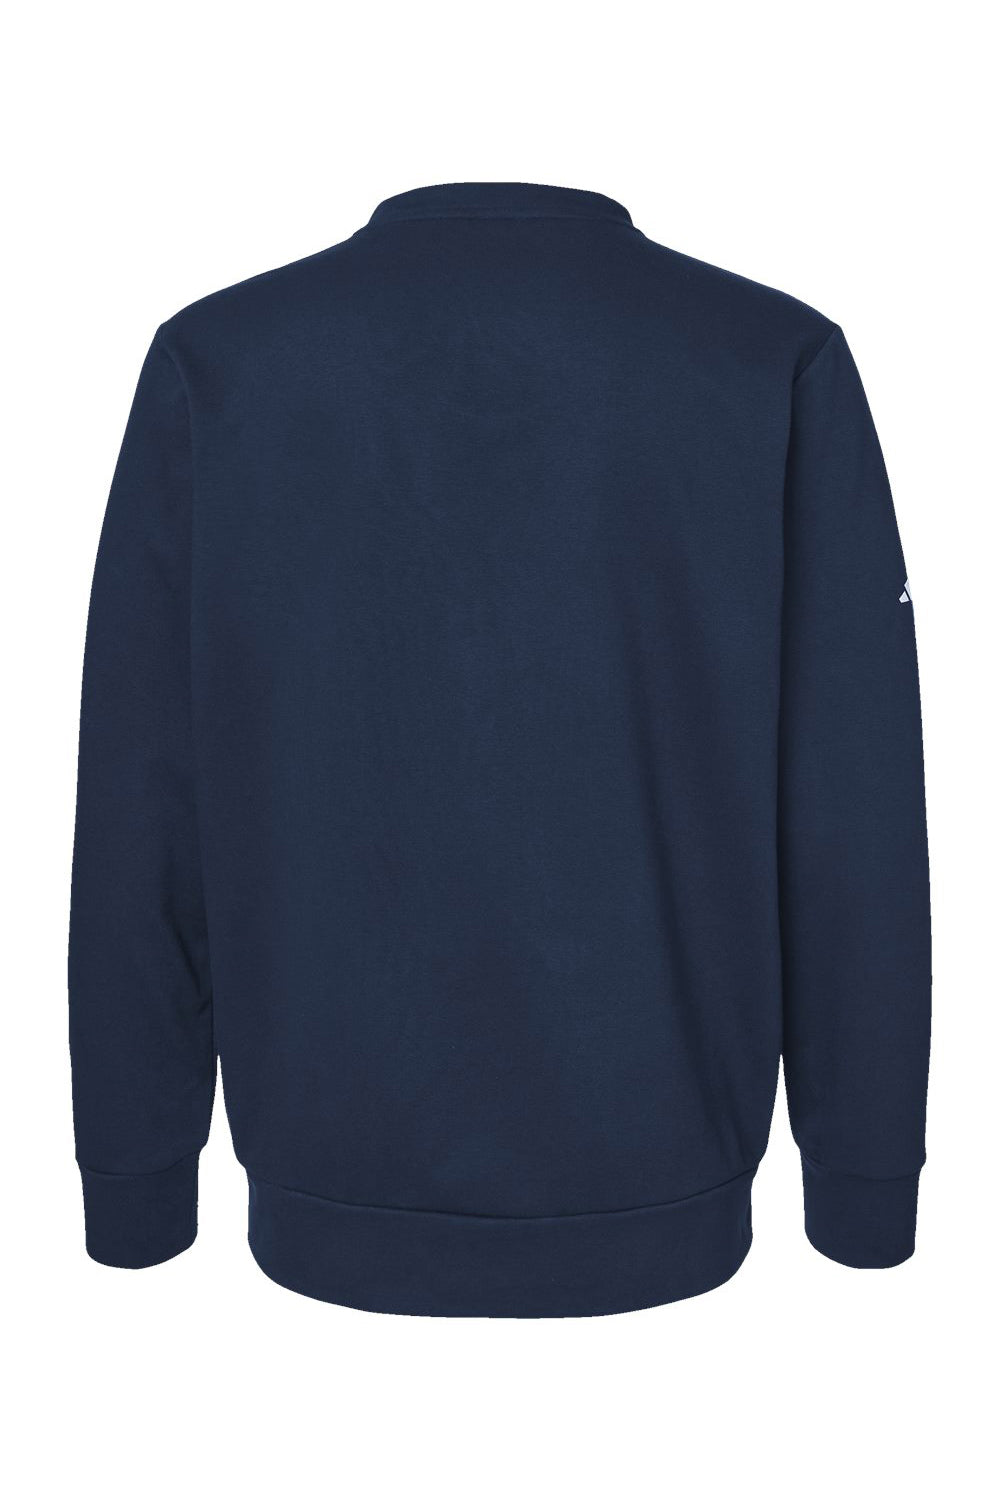 Adidas A434 Mens Fleece Crewneck Sweatshirt Collegiate Navy Blue Flat Back